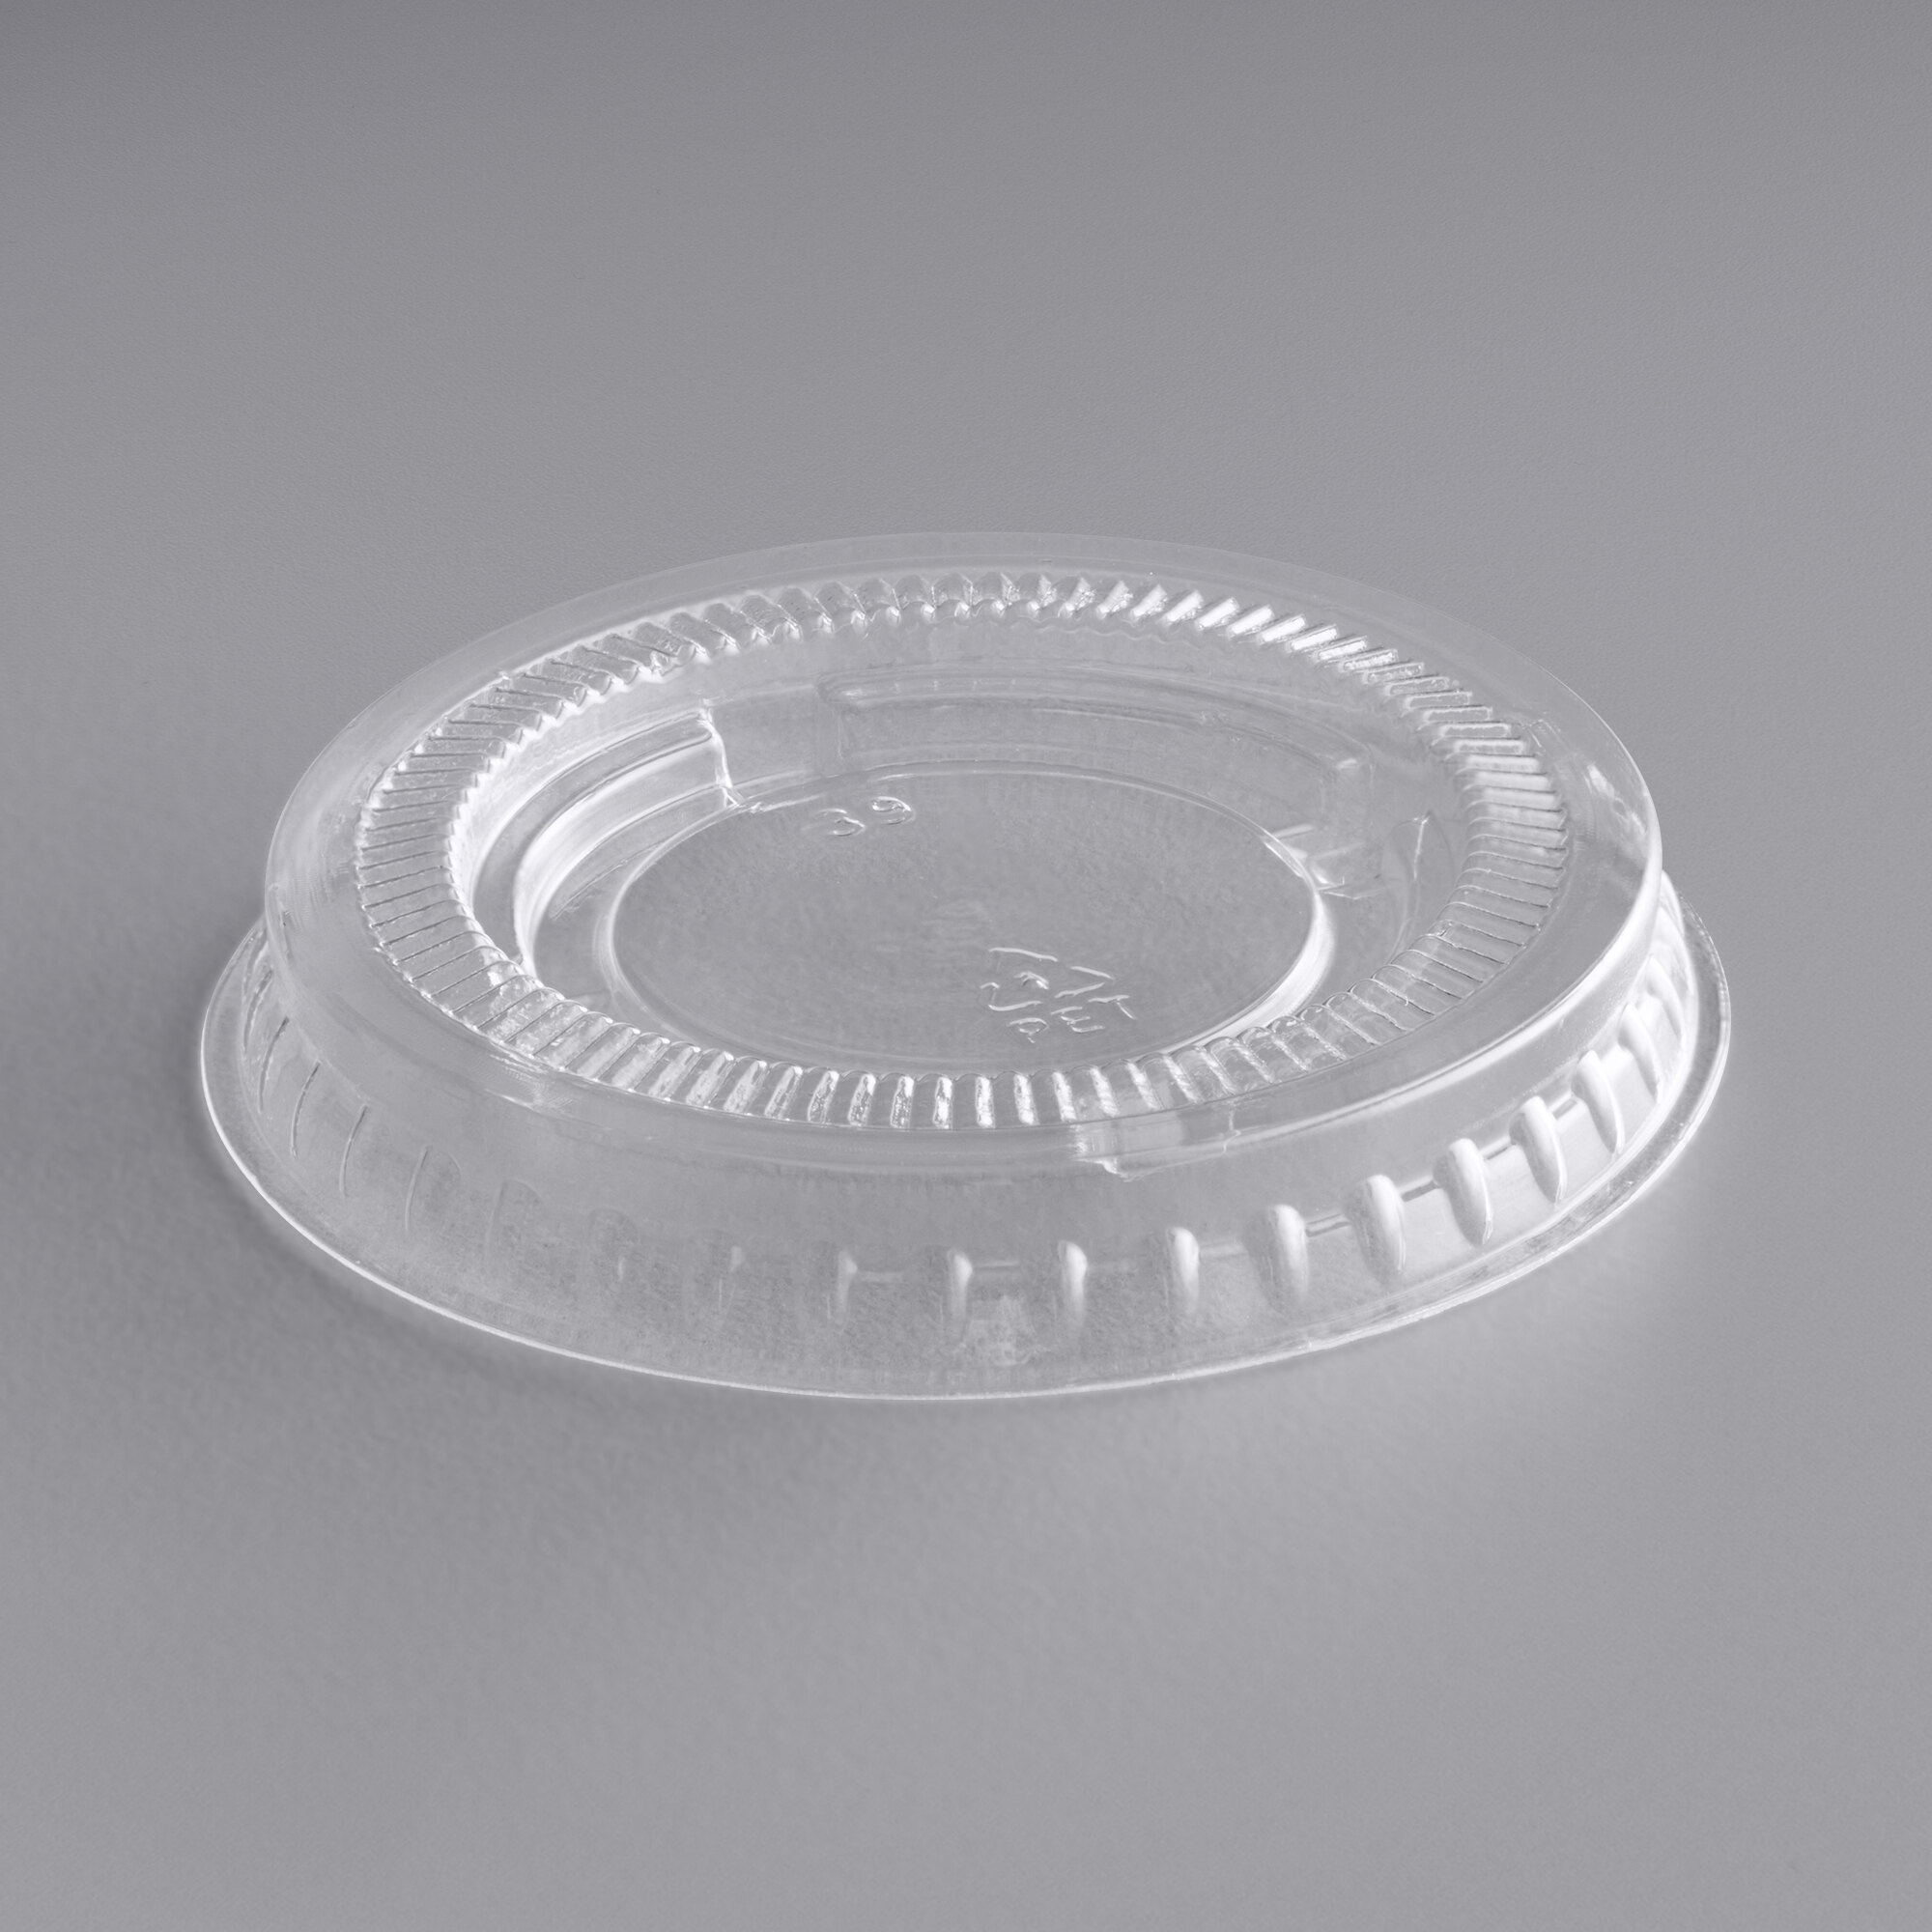 Choice 1 oz. Clear Plastic Souffle Cup / Portion Cup - 2500/Case